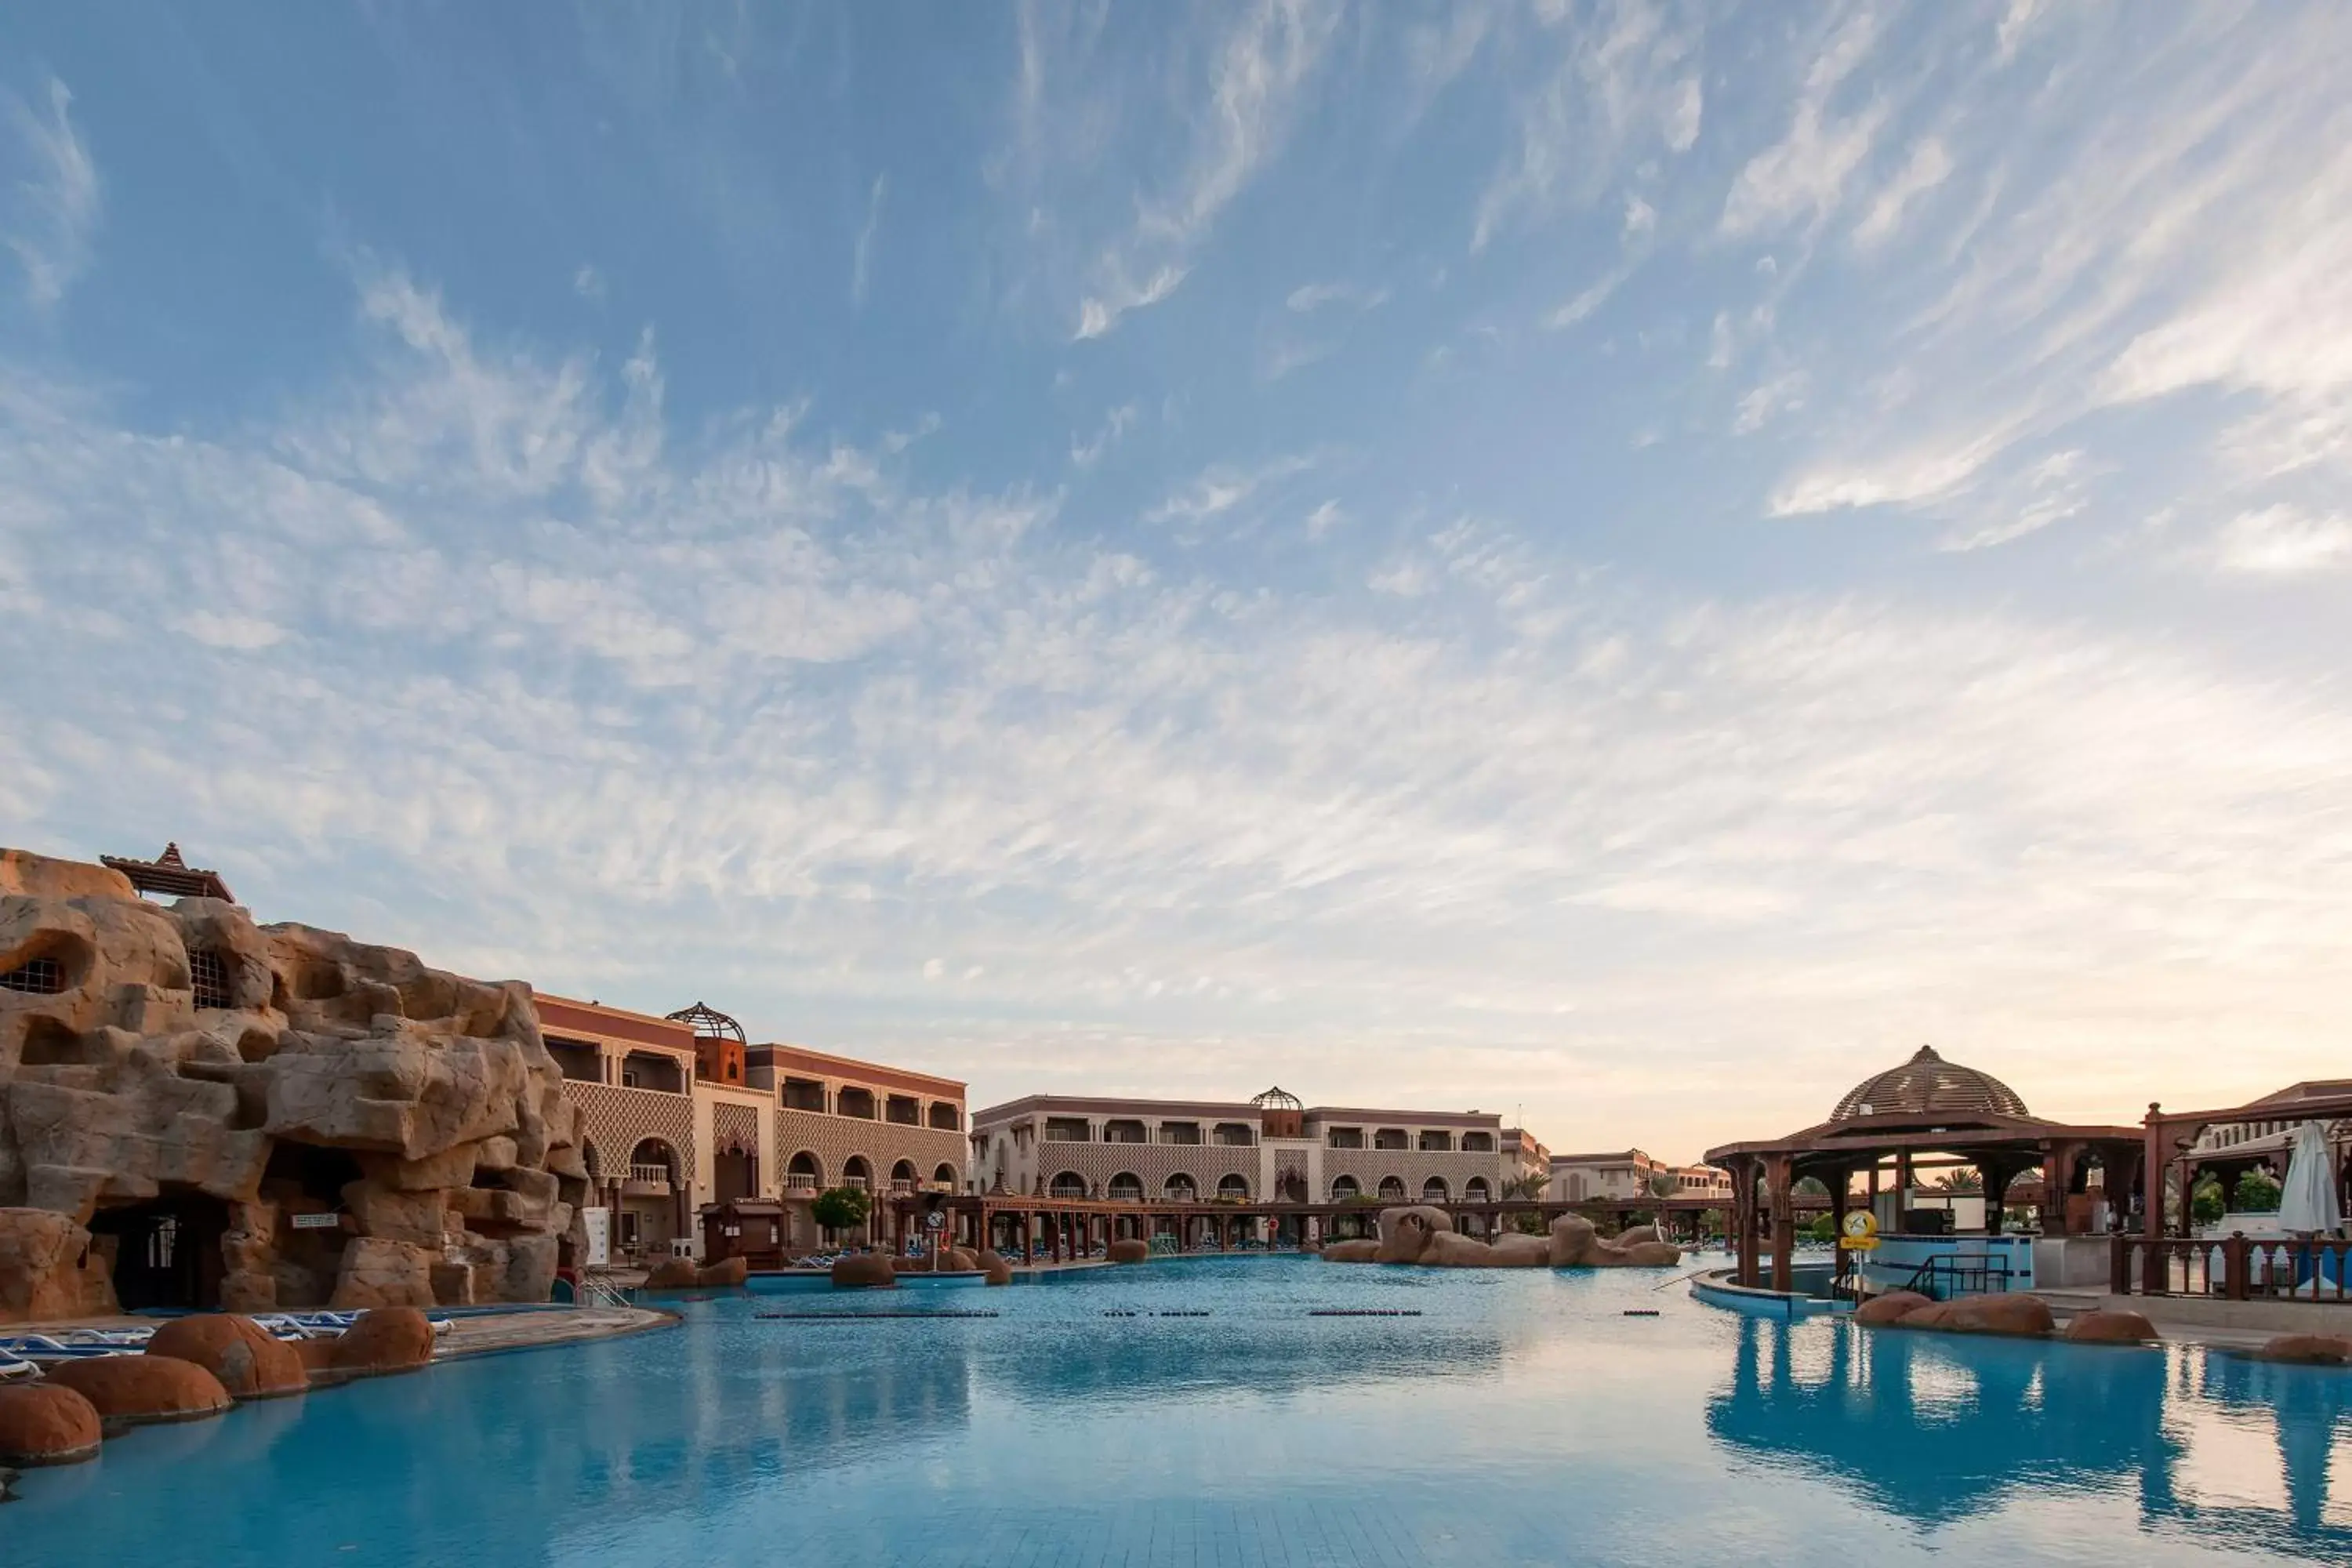 Swimming Pool in Sunrise Mamlouk Palace Resort